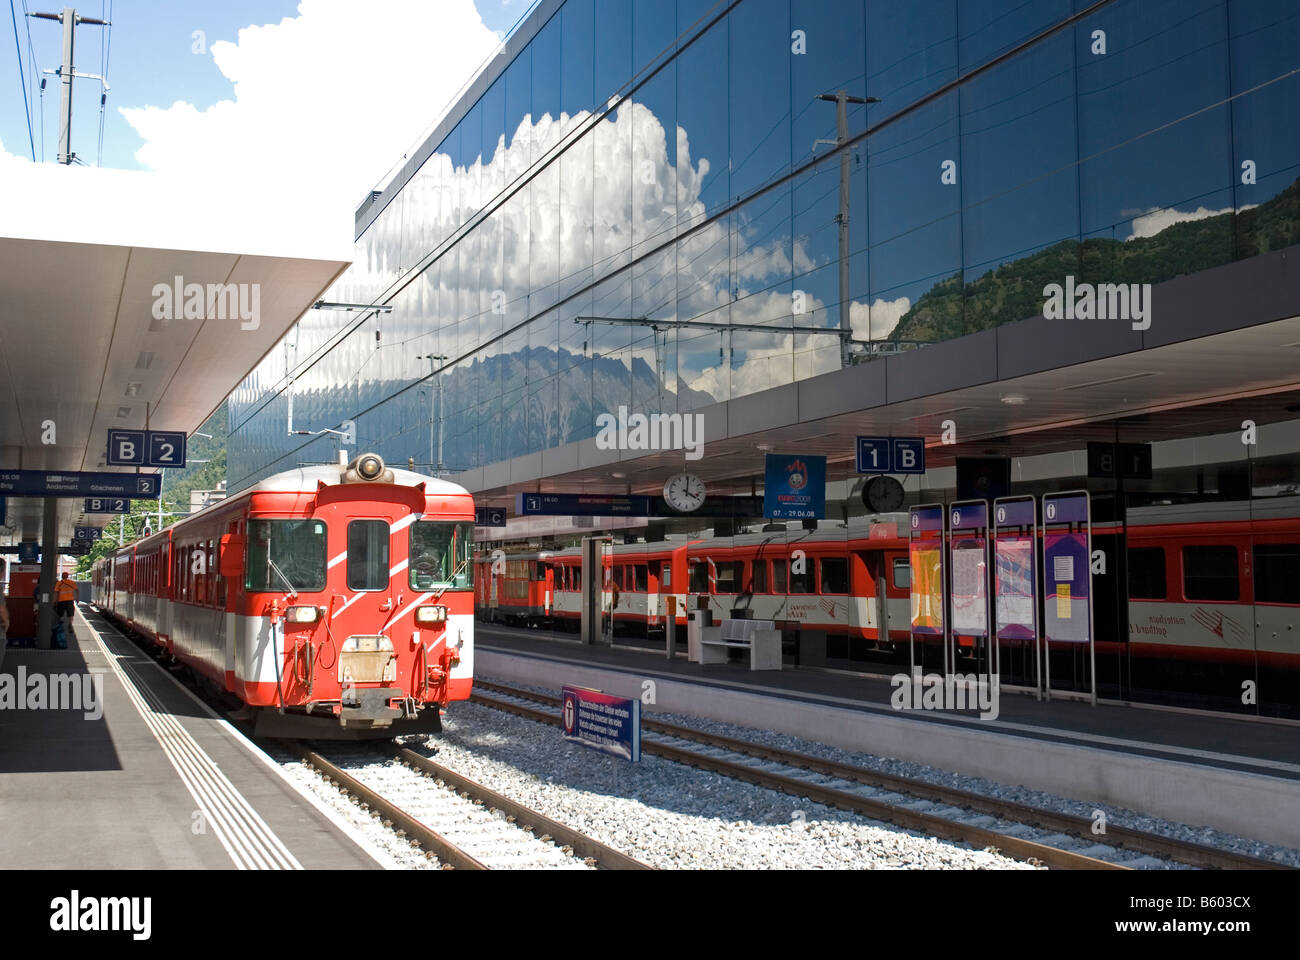 Visp train station, Switzerland Stock Photo